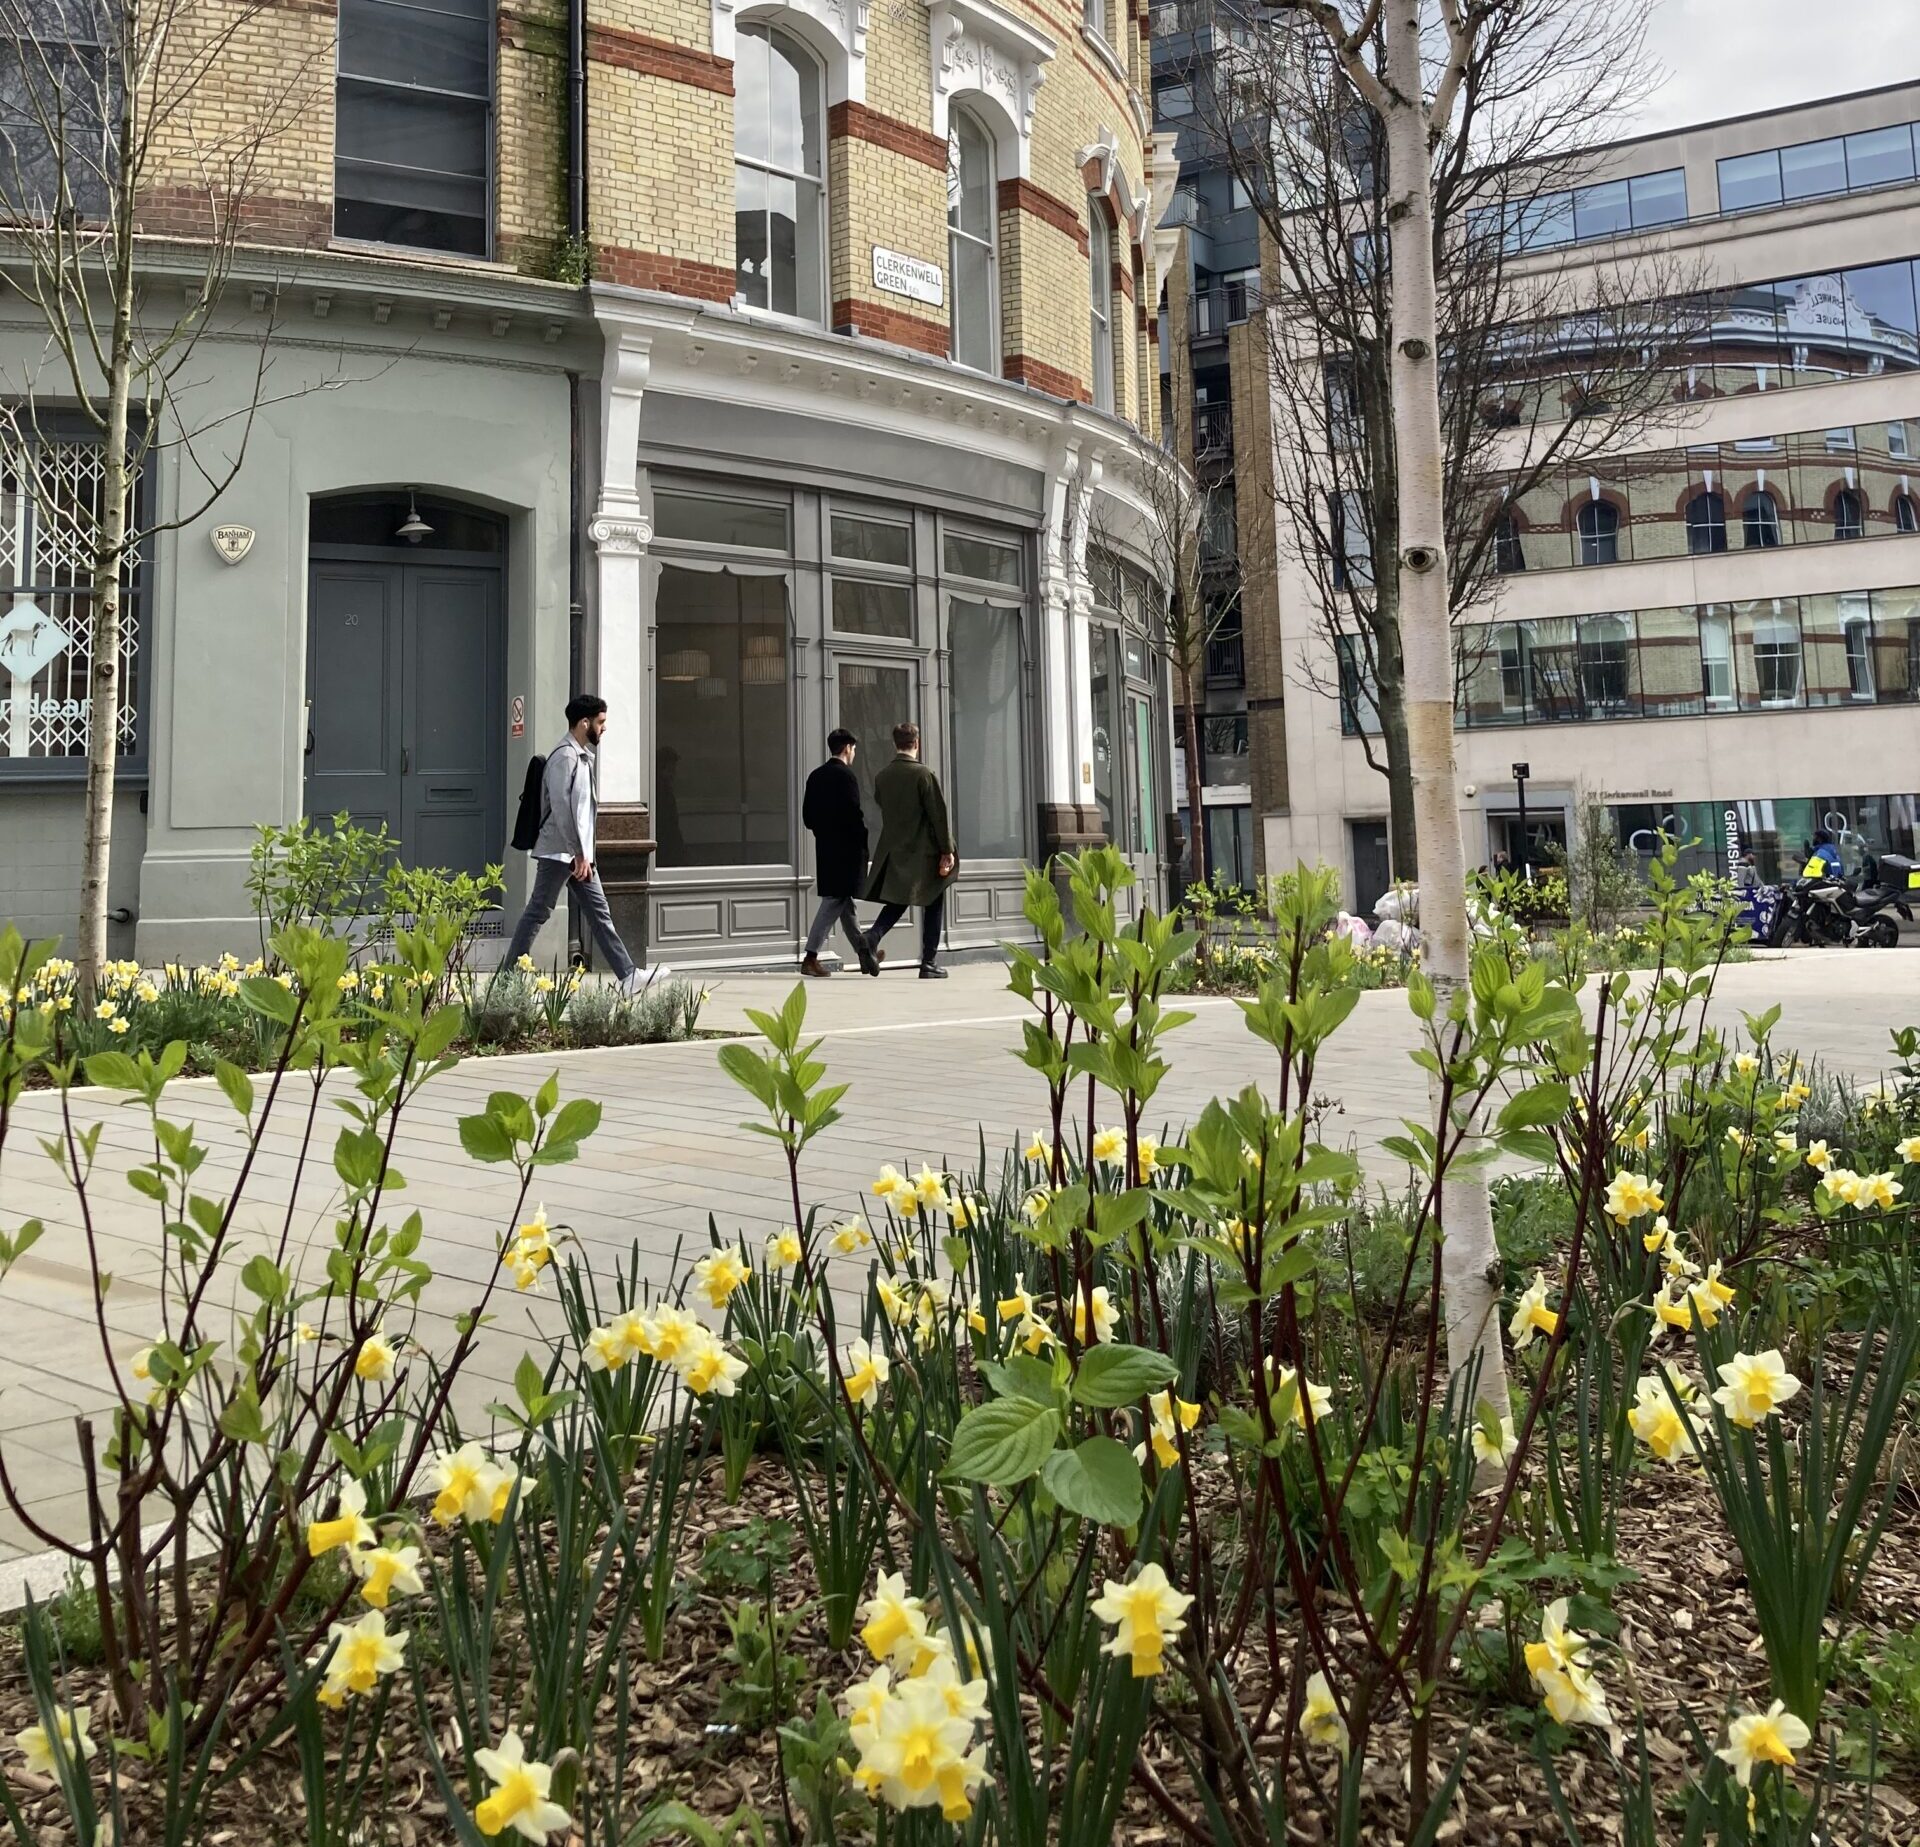 Clerkenwell Cross with daffodils